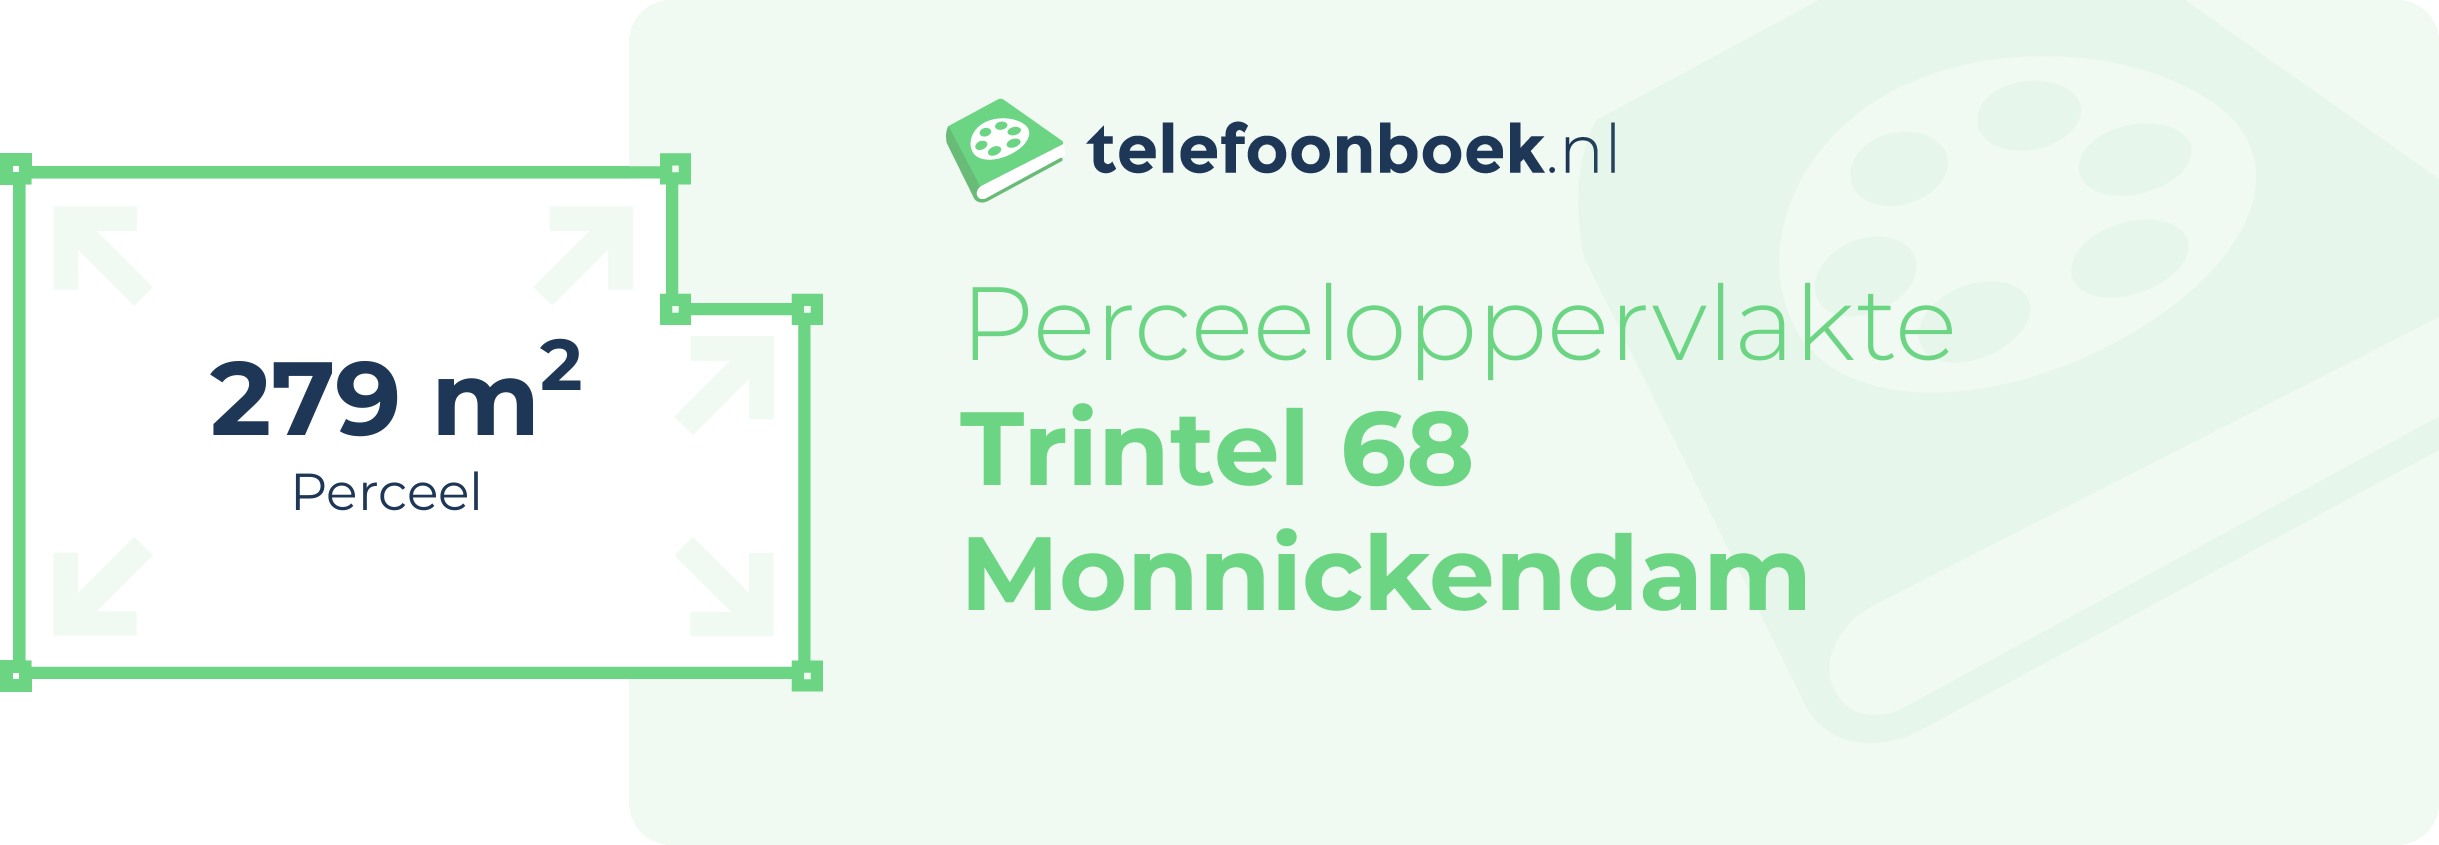 Perceeloppervlakte Trintel 68 Monnickendam